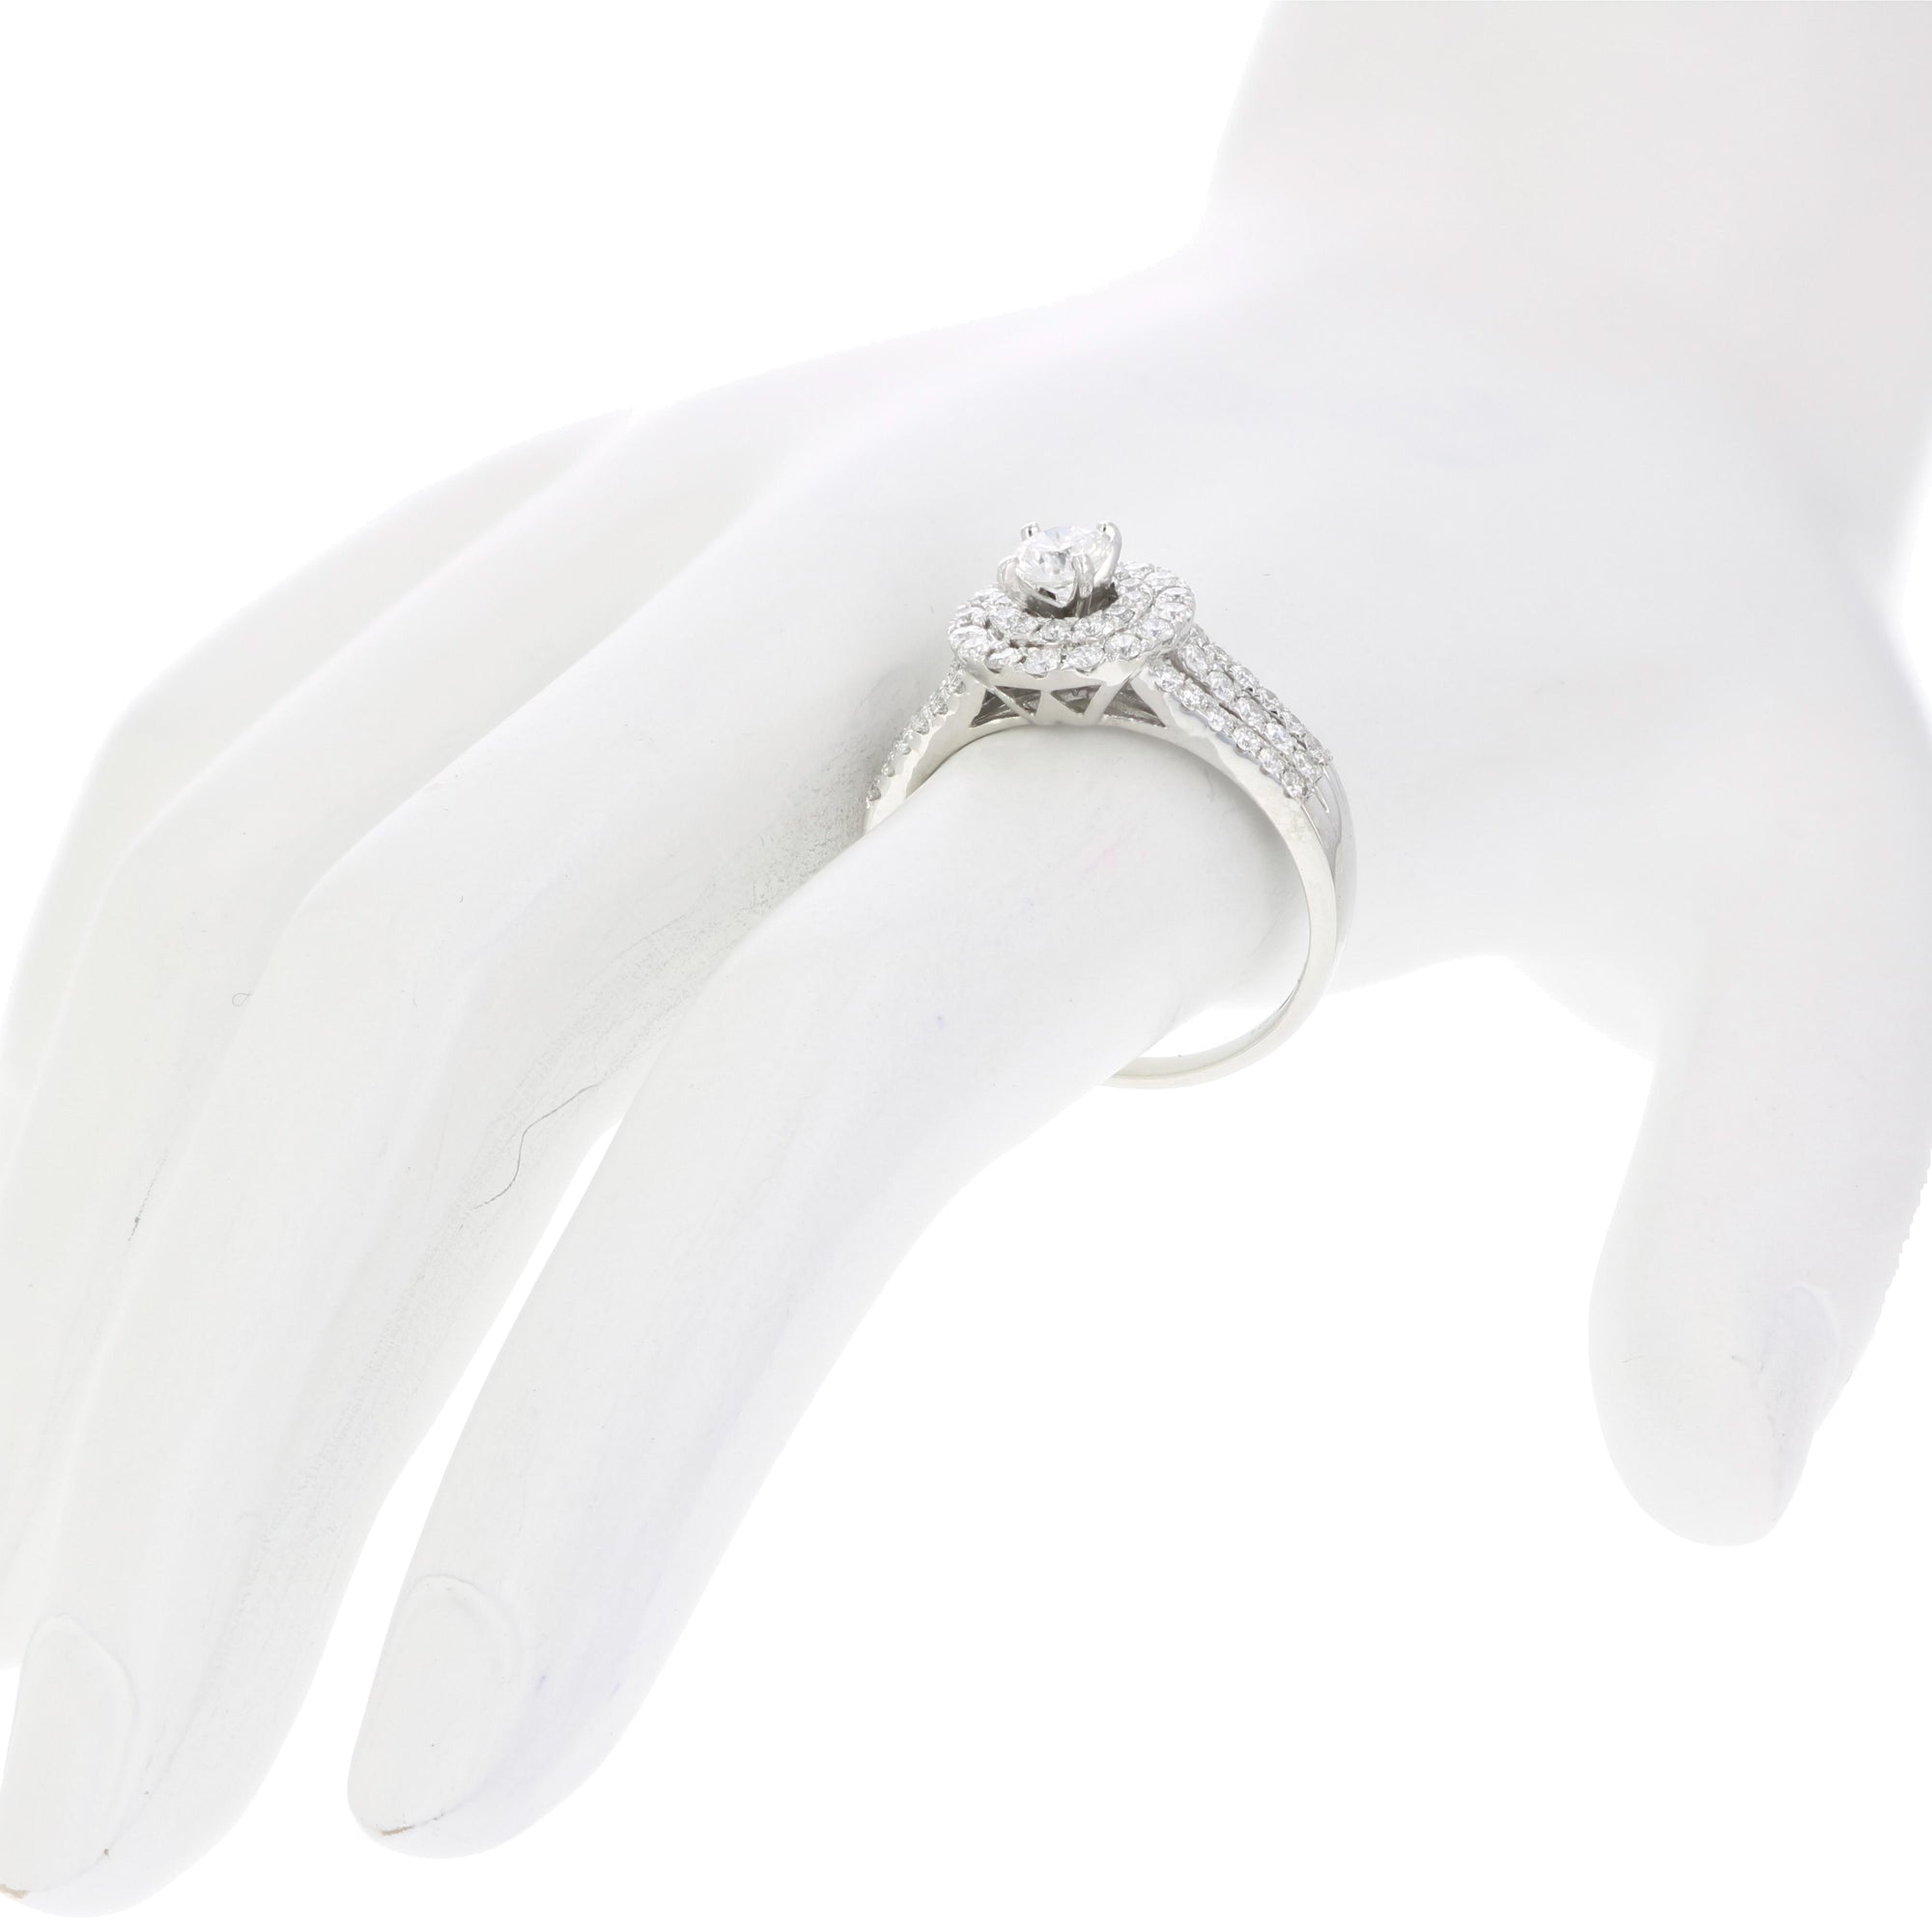 1 cttw Diamond Engagement Ring 14K White Gold Halo Style Round Bridal Wedding